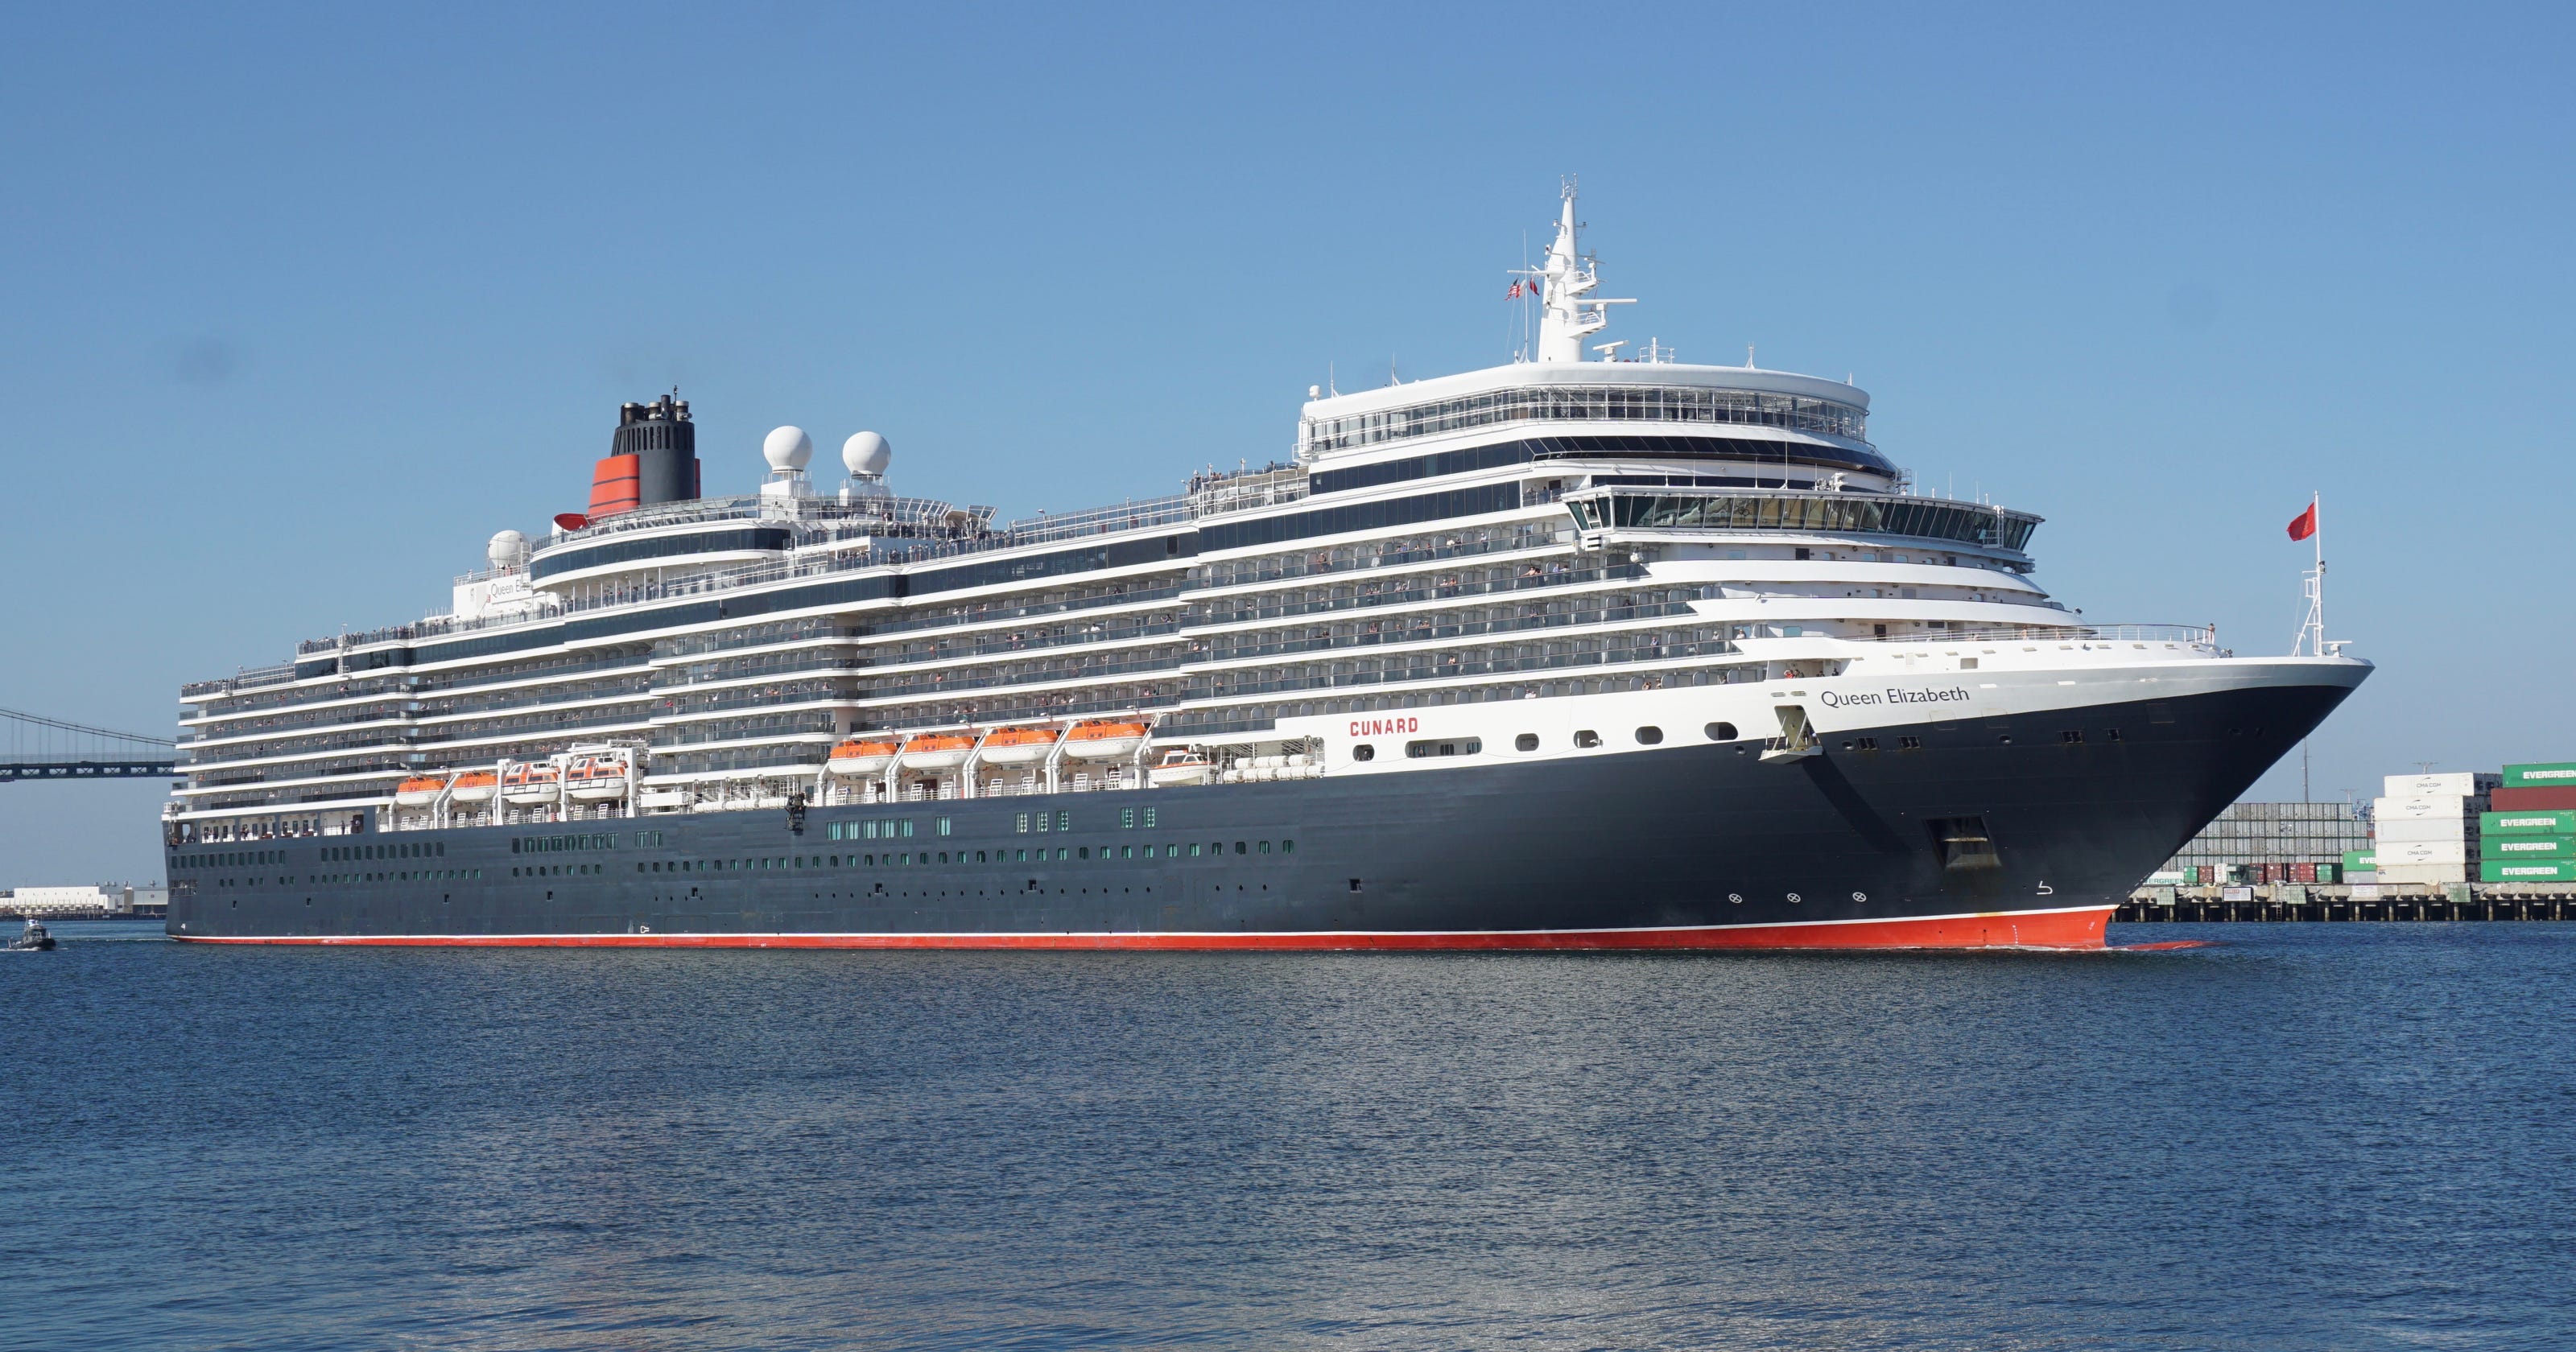 Cruise ship tour See inside Cunard Line's Queen Elizabeth